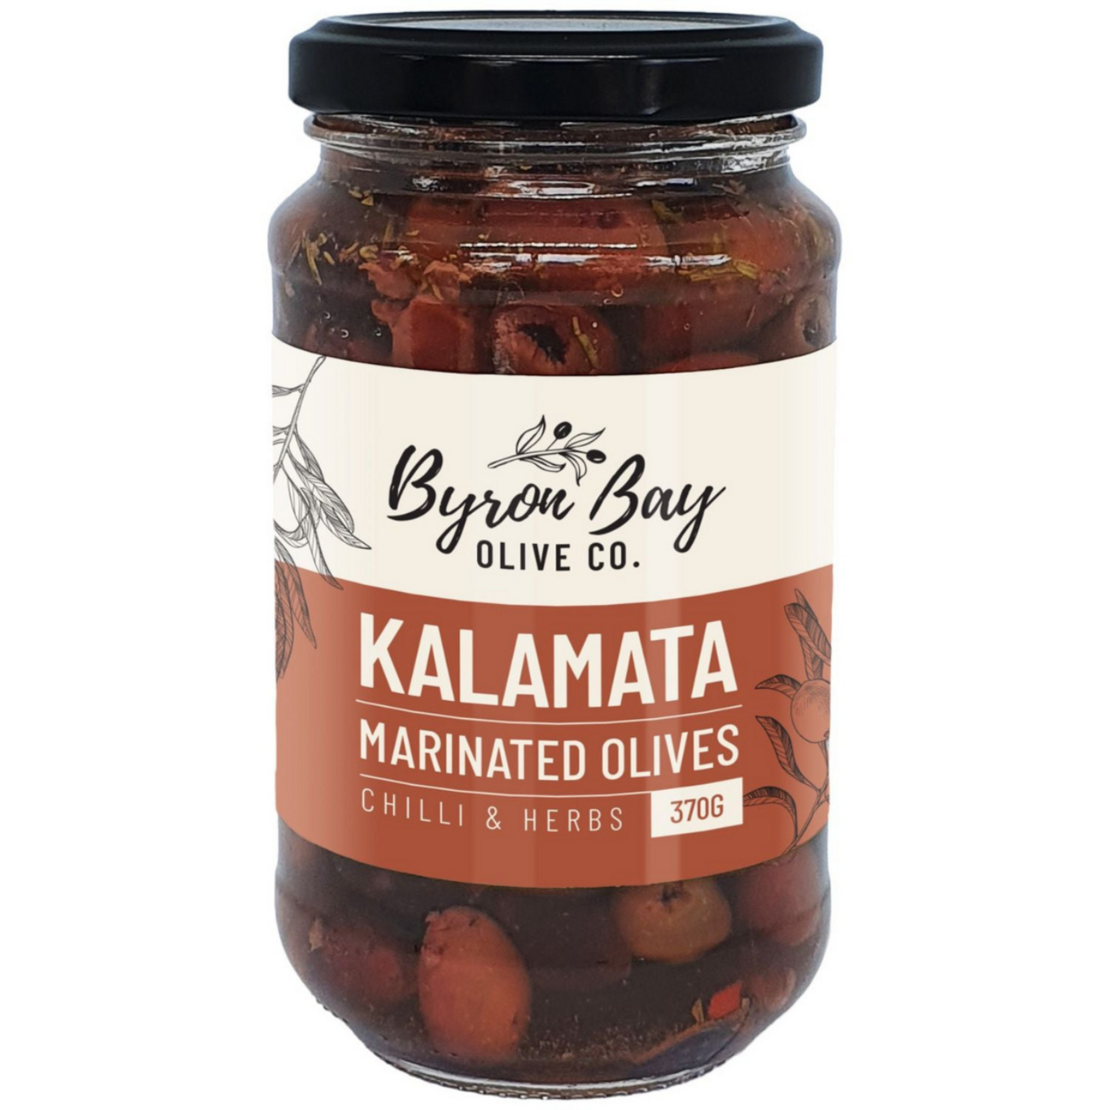 Kalamata / Chilli Jar  Byron Bay Olive Co. Olives byron-bay-olives.myshopify.com Byron Bay Olive Company